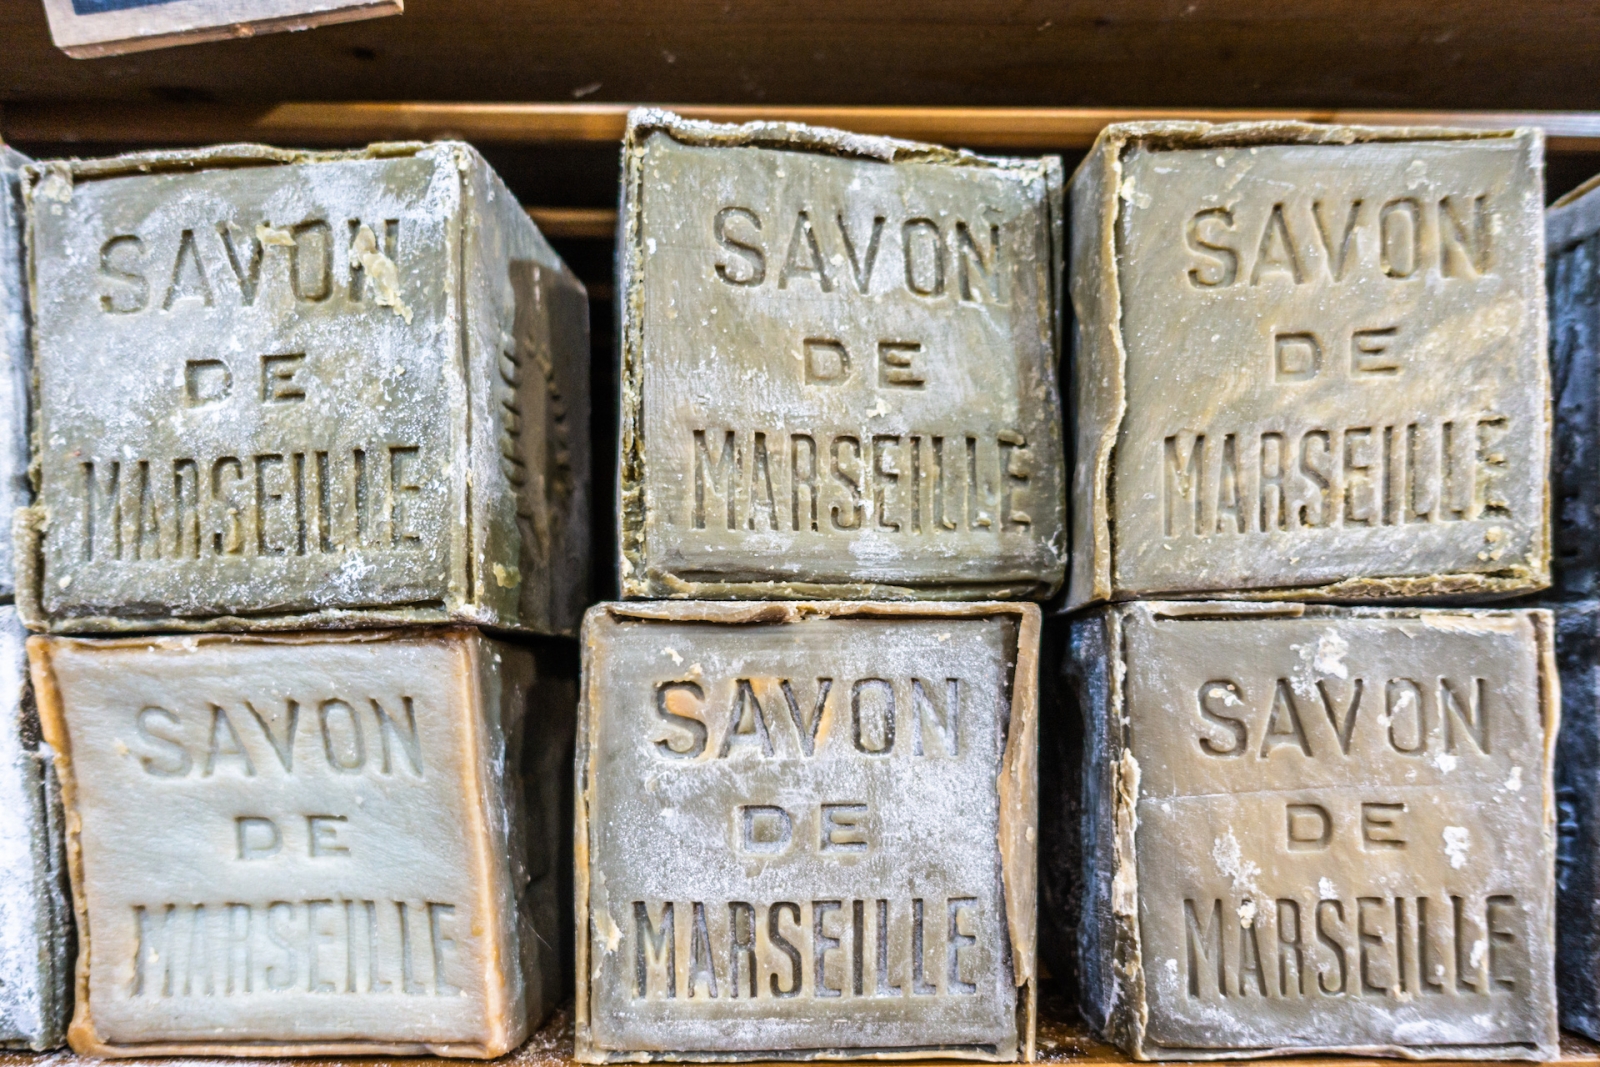 Traditional blocks of Marseille soap or Savon de Marseille